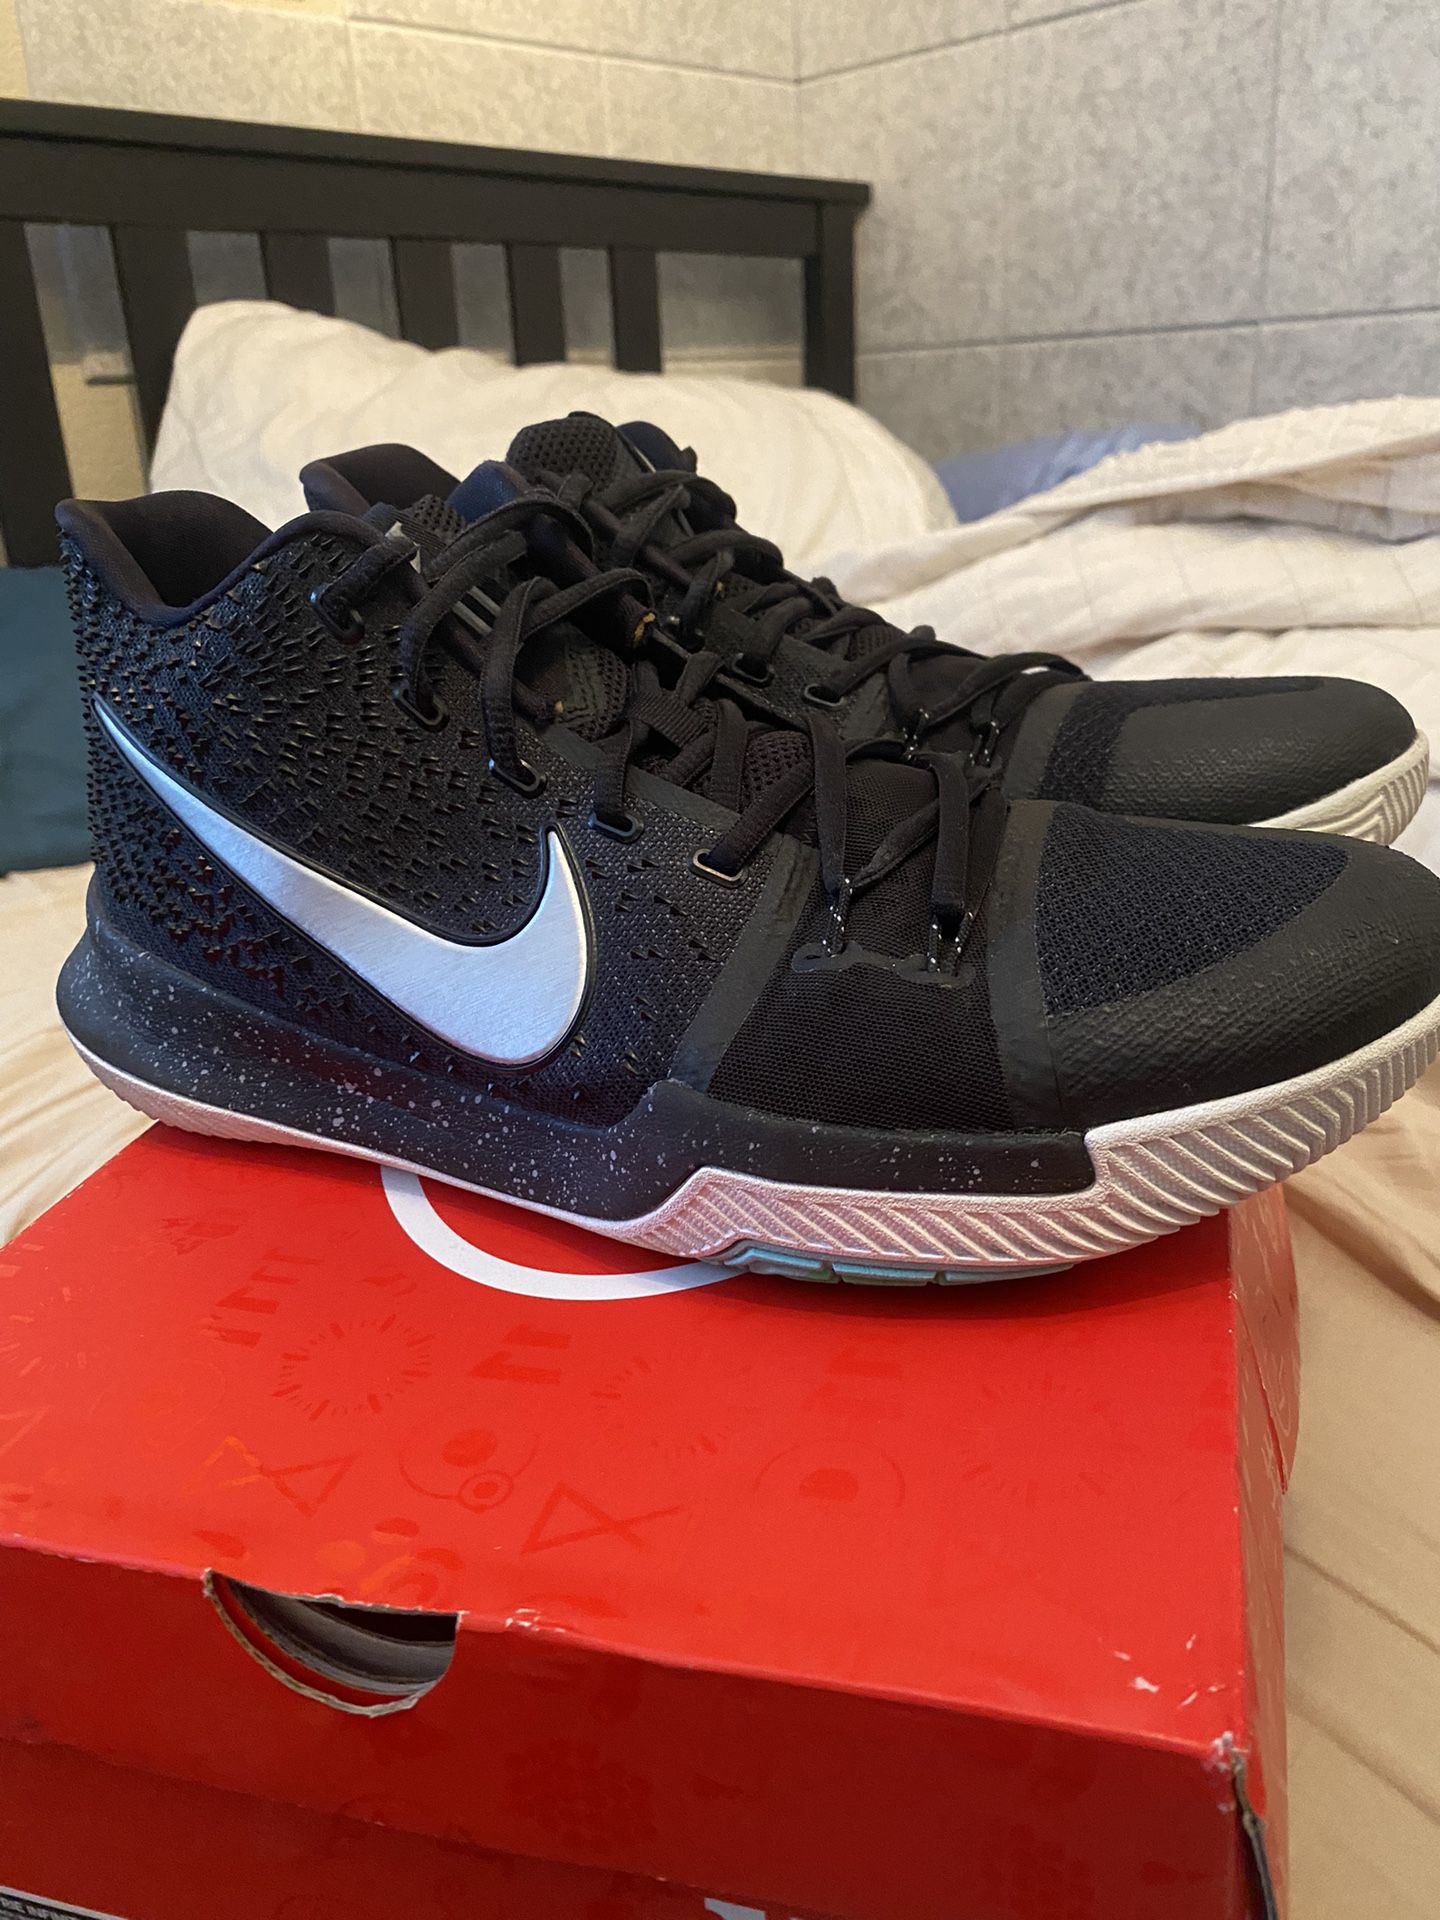 Nike Kyrie 3 “Black Ice” Size 11.5